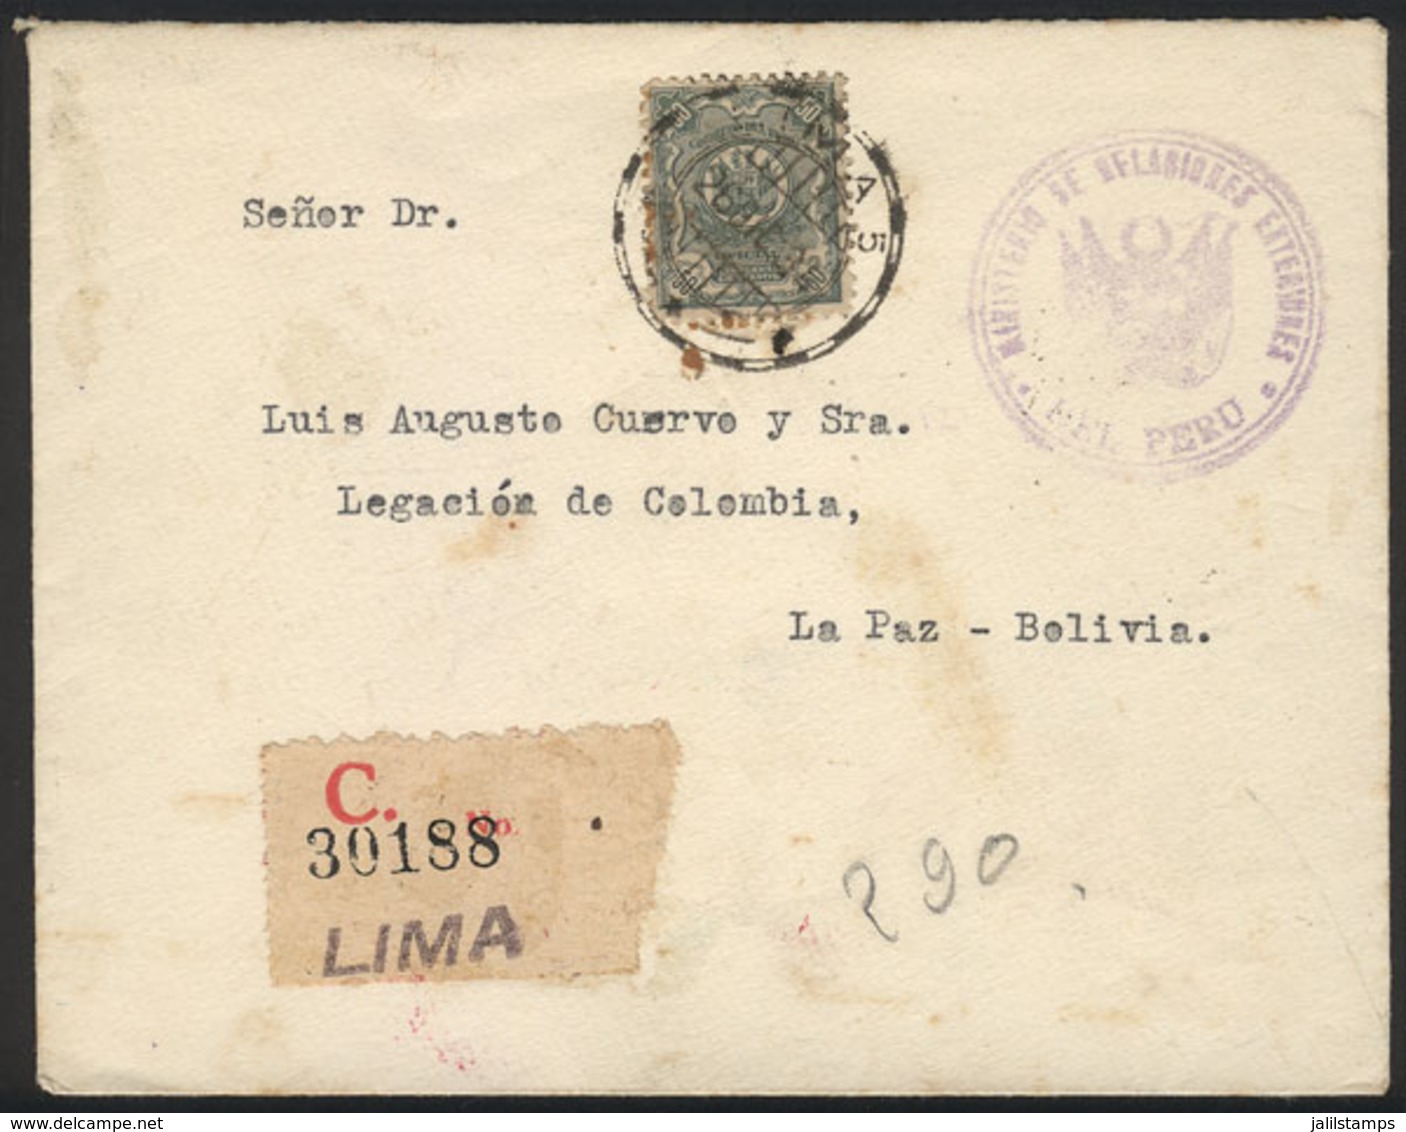 PERU: Registered Cover Franked By Sc.O30, From Lima To Bolivia On 26/DE/1934, VF Quality! - Perú